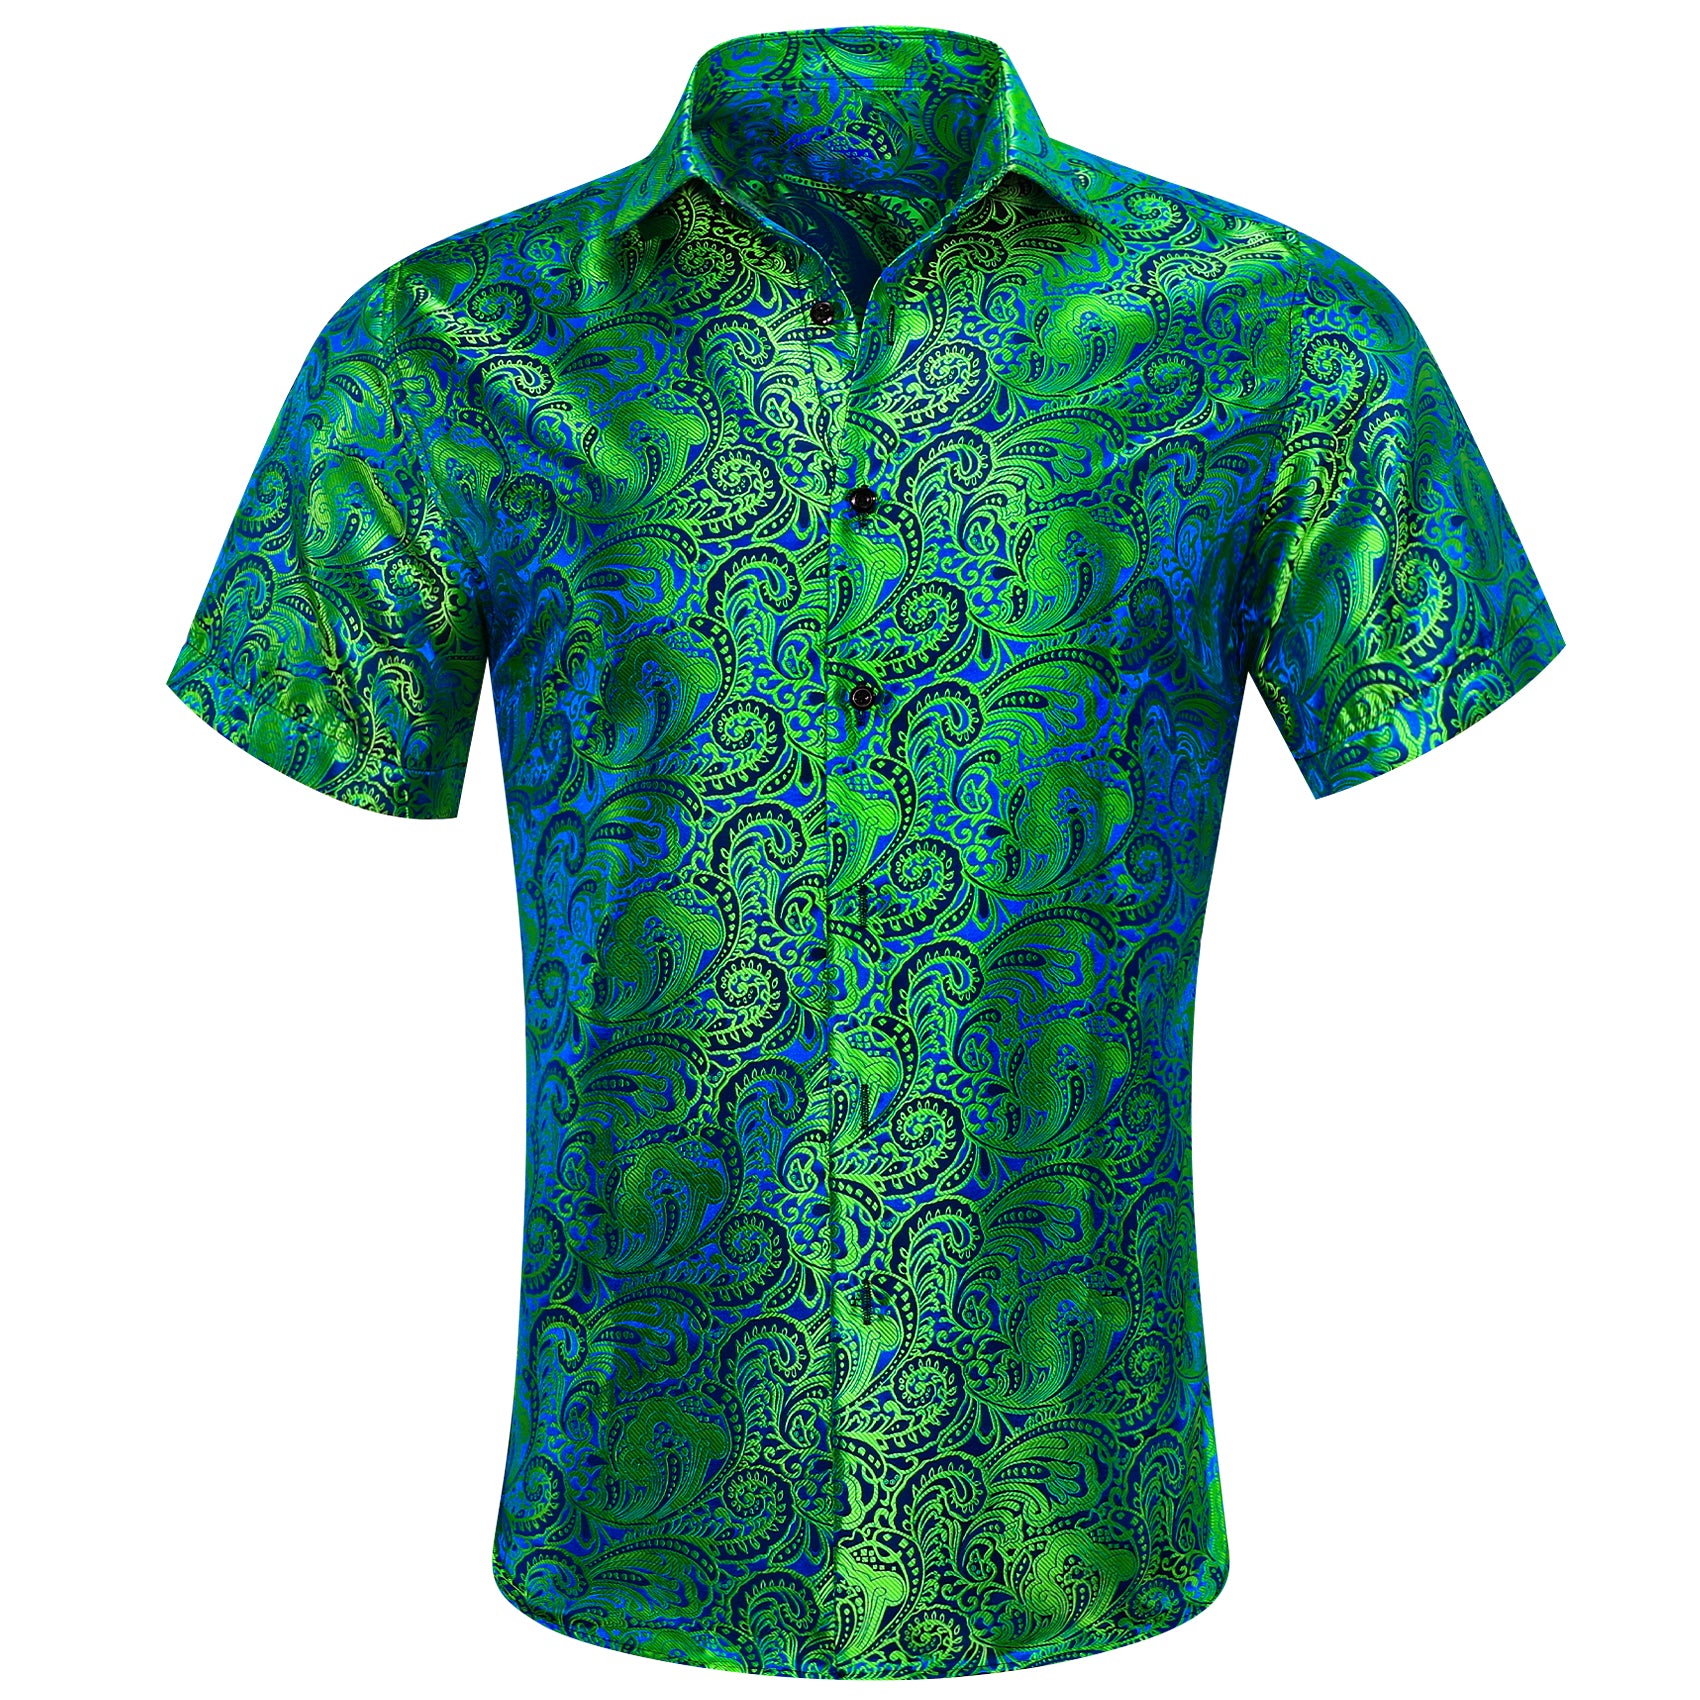 Barry.wang Summer Green Blue Paisley Short Sleeves Shirt